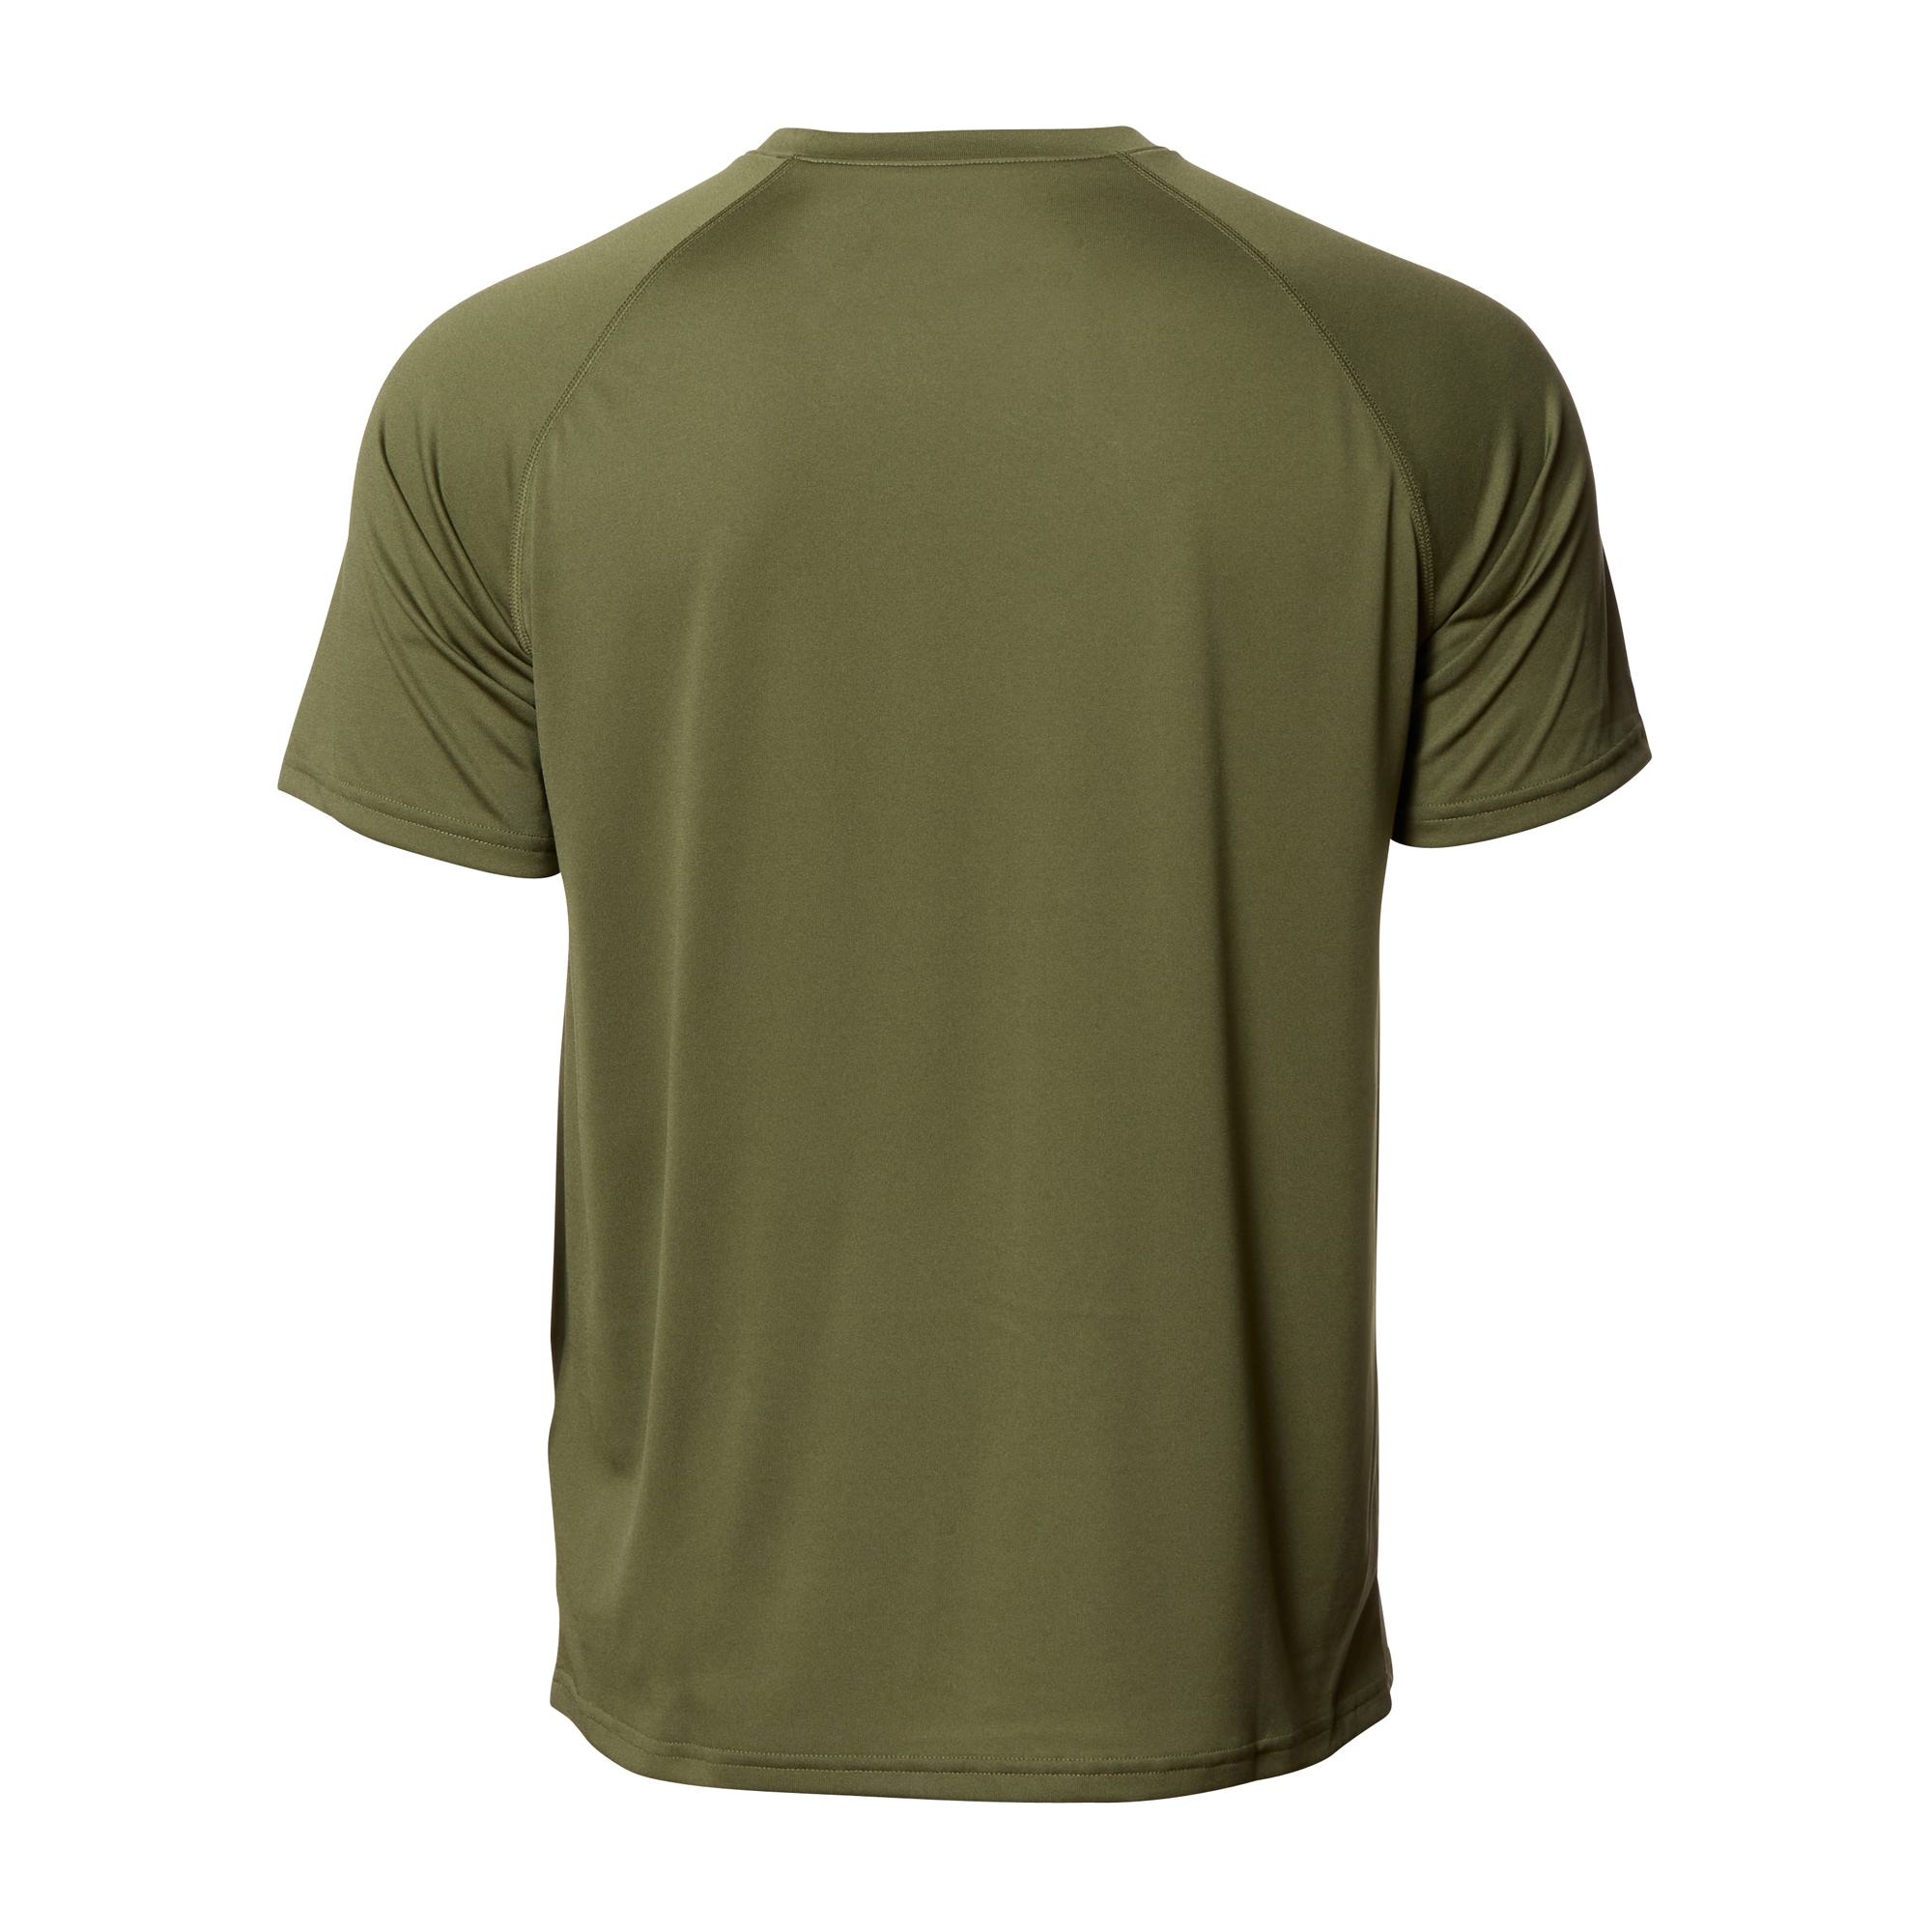 Purchase the Under Armour Tactical T-Shirt Tech Tee HeatGear oli